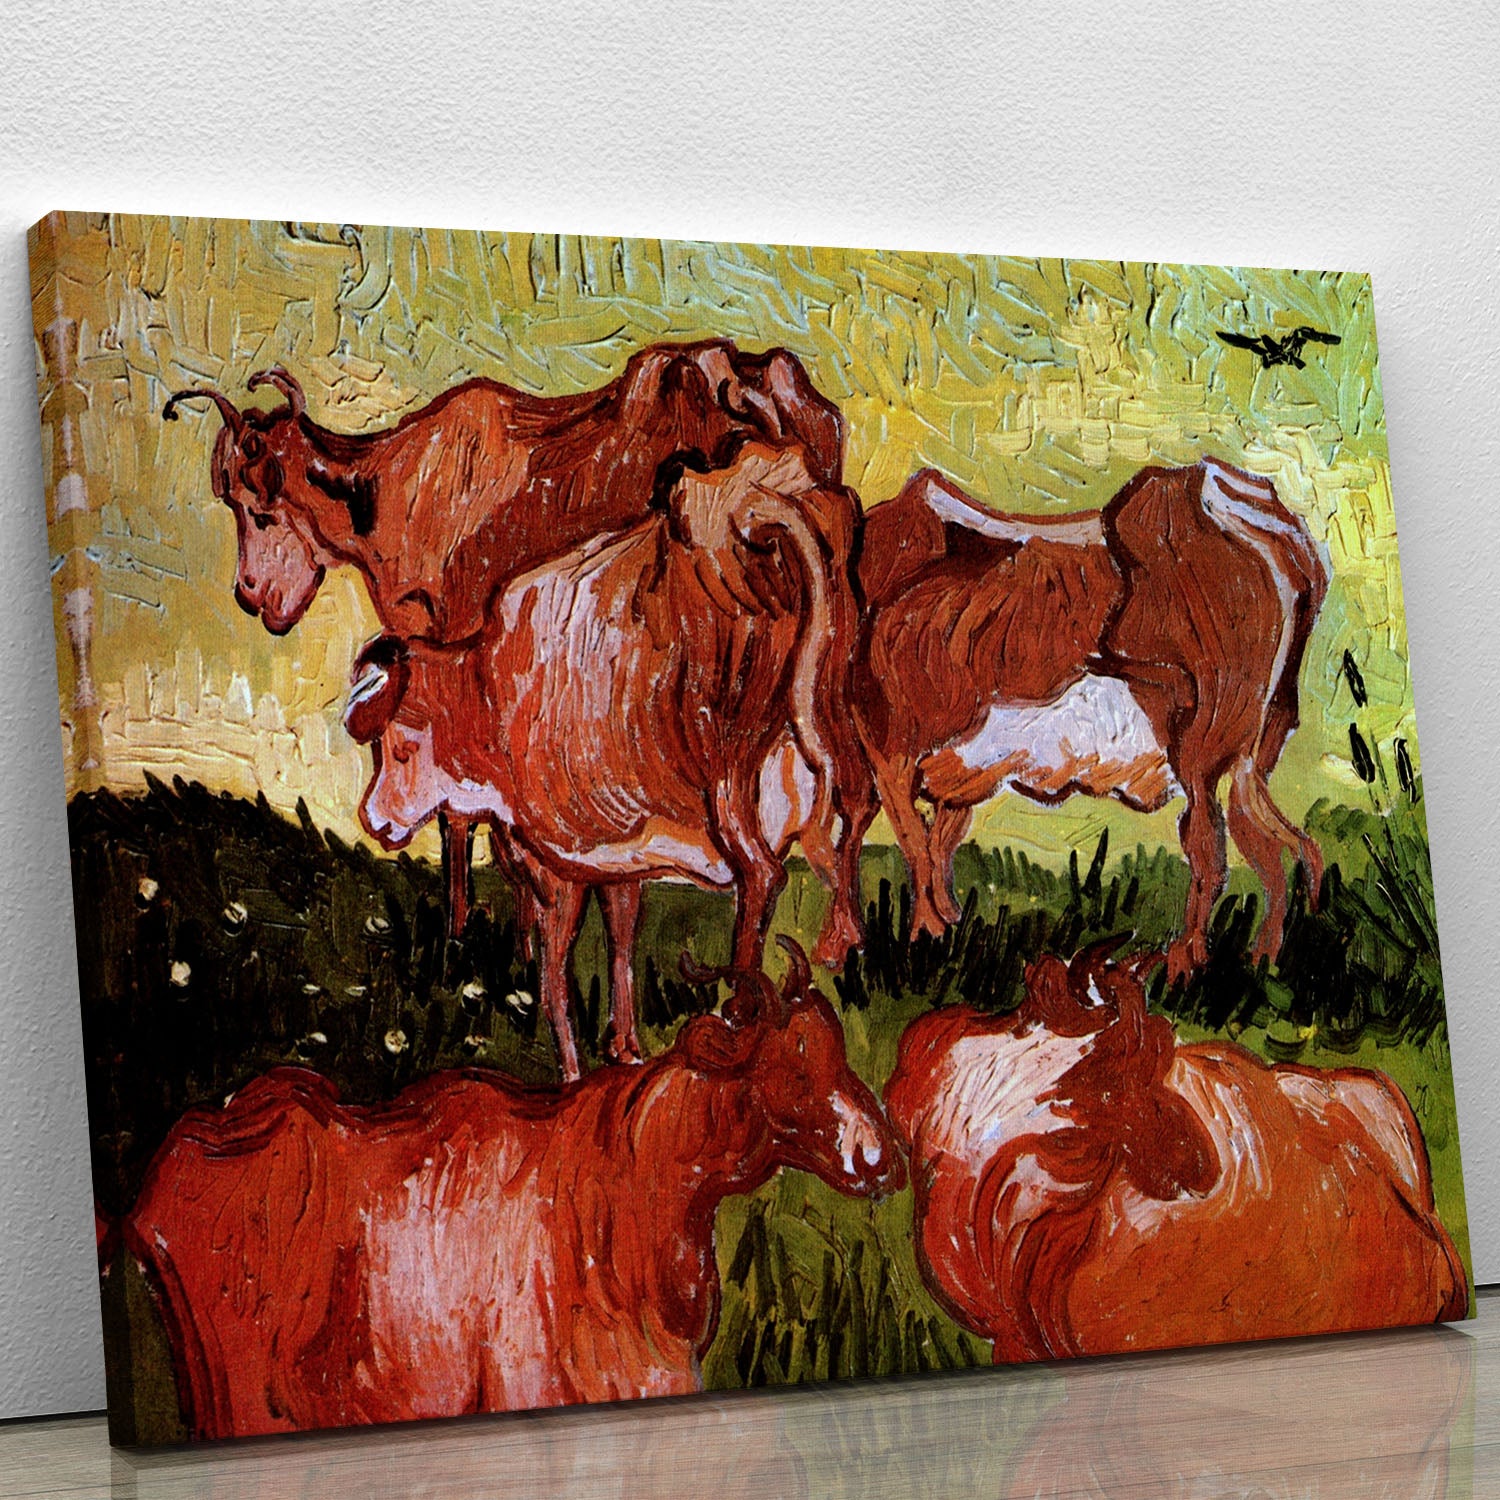 Cows after Jordaens by Van Gogh Canvas Print or Poster - Canvas Art Rocks - 1